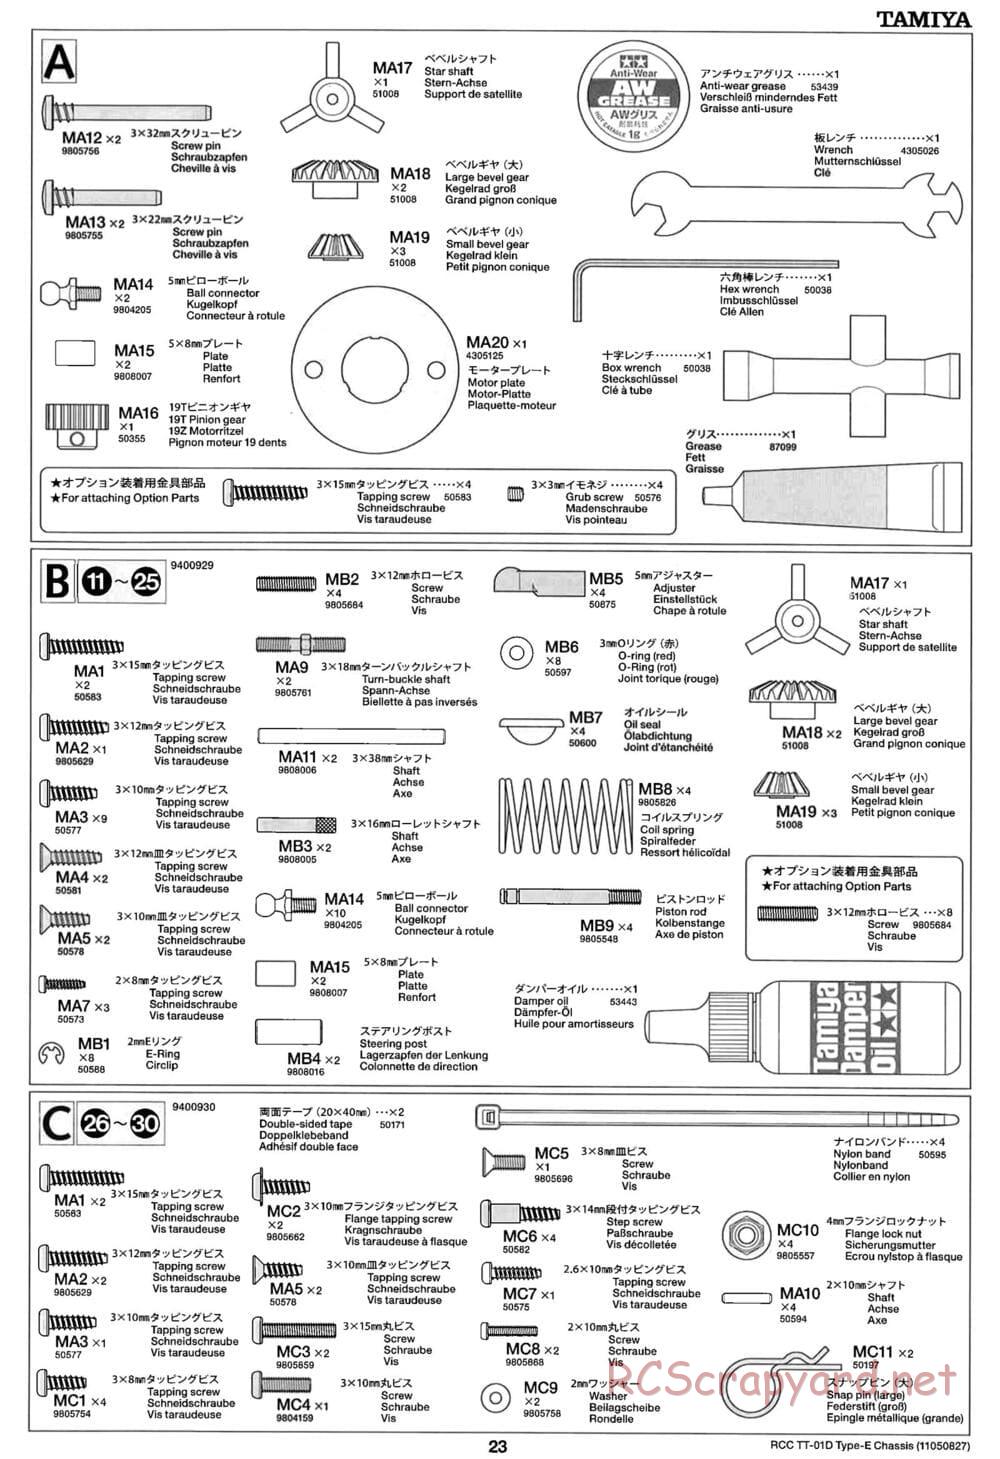 Tamiya - TT-01D Type-E (TT-01ED) - Drift Spec Chassis - Manual - Page 23